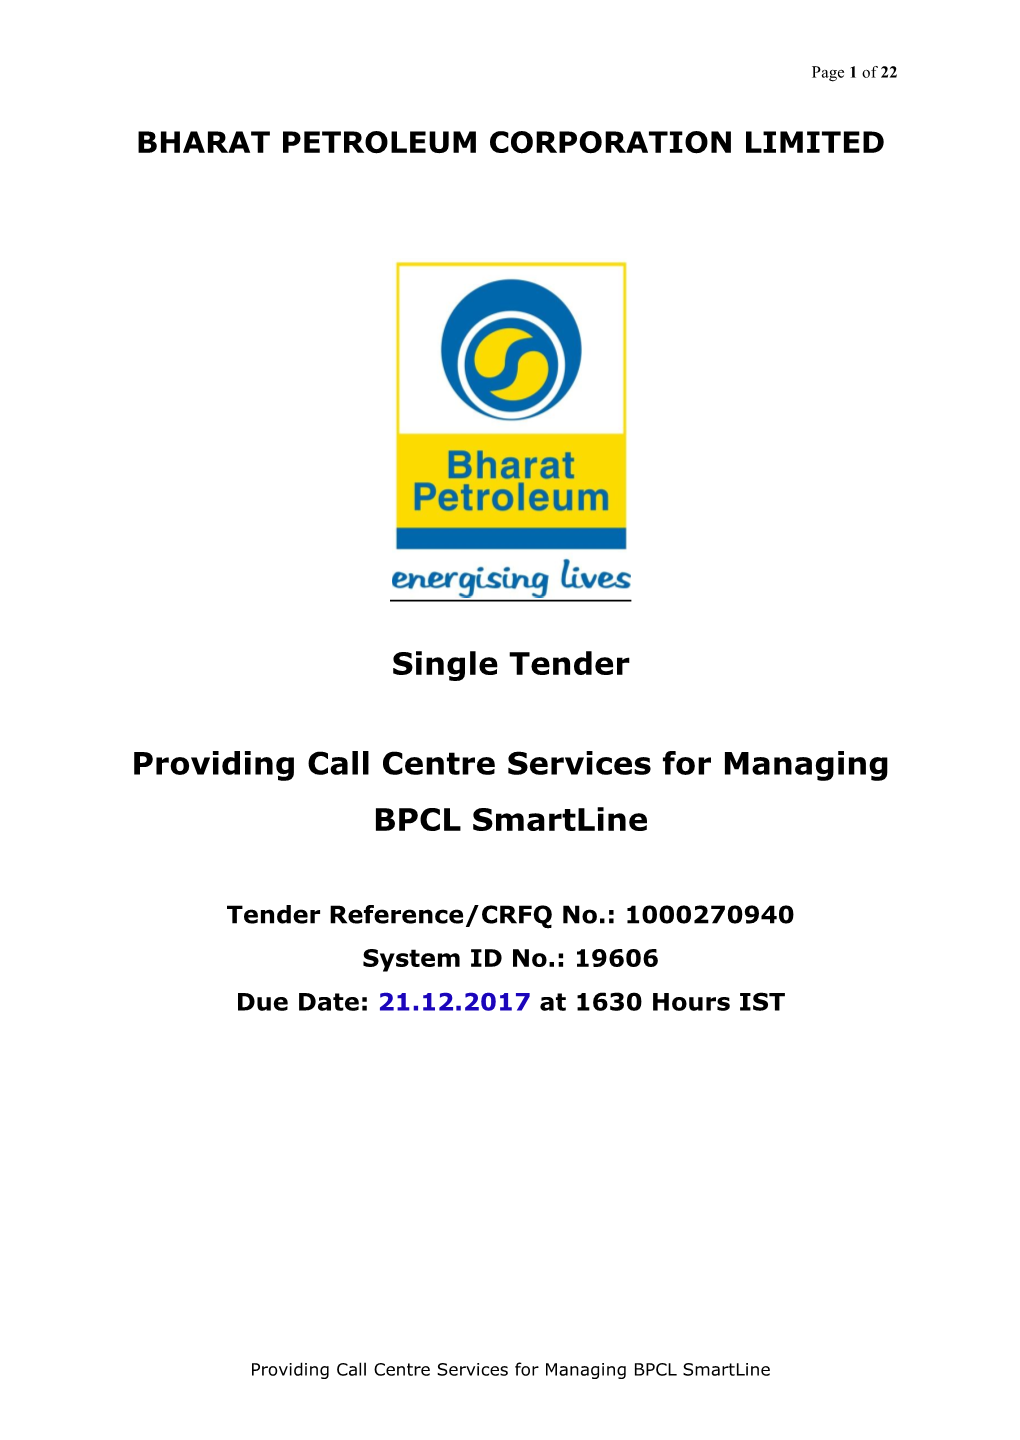 Single Tender Providing Call Centre Services for Managing BPCL Smartline